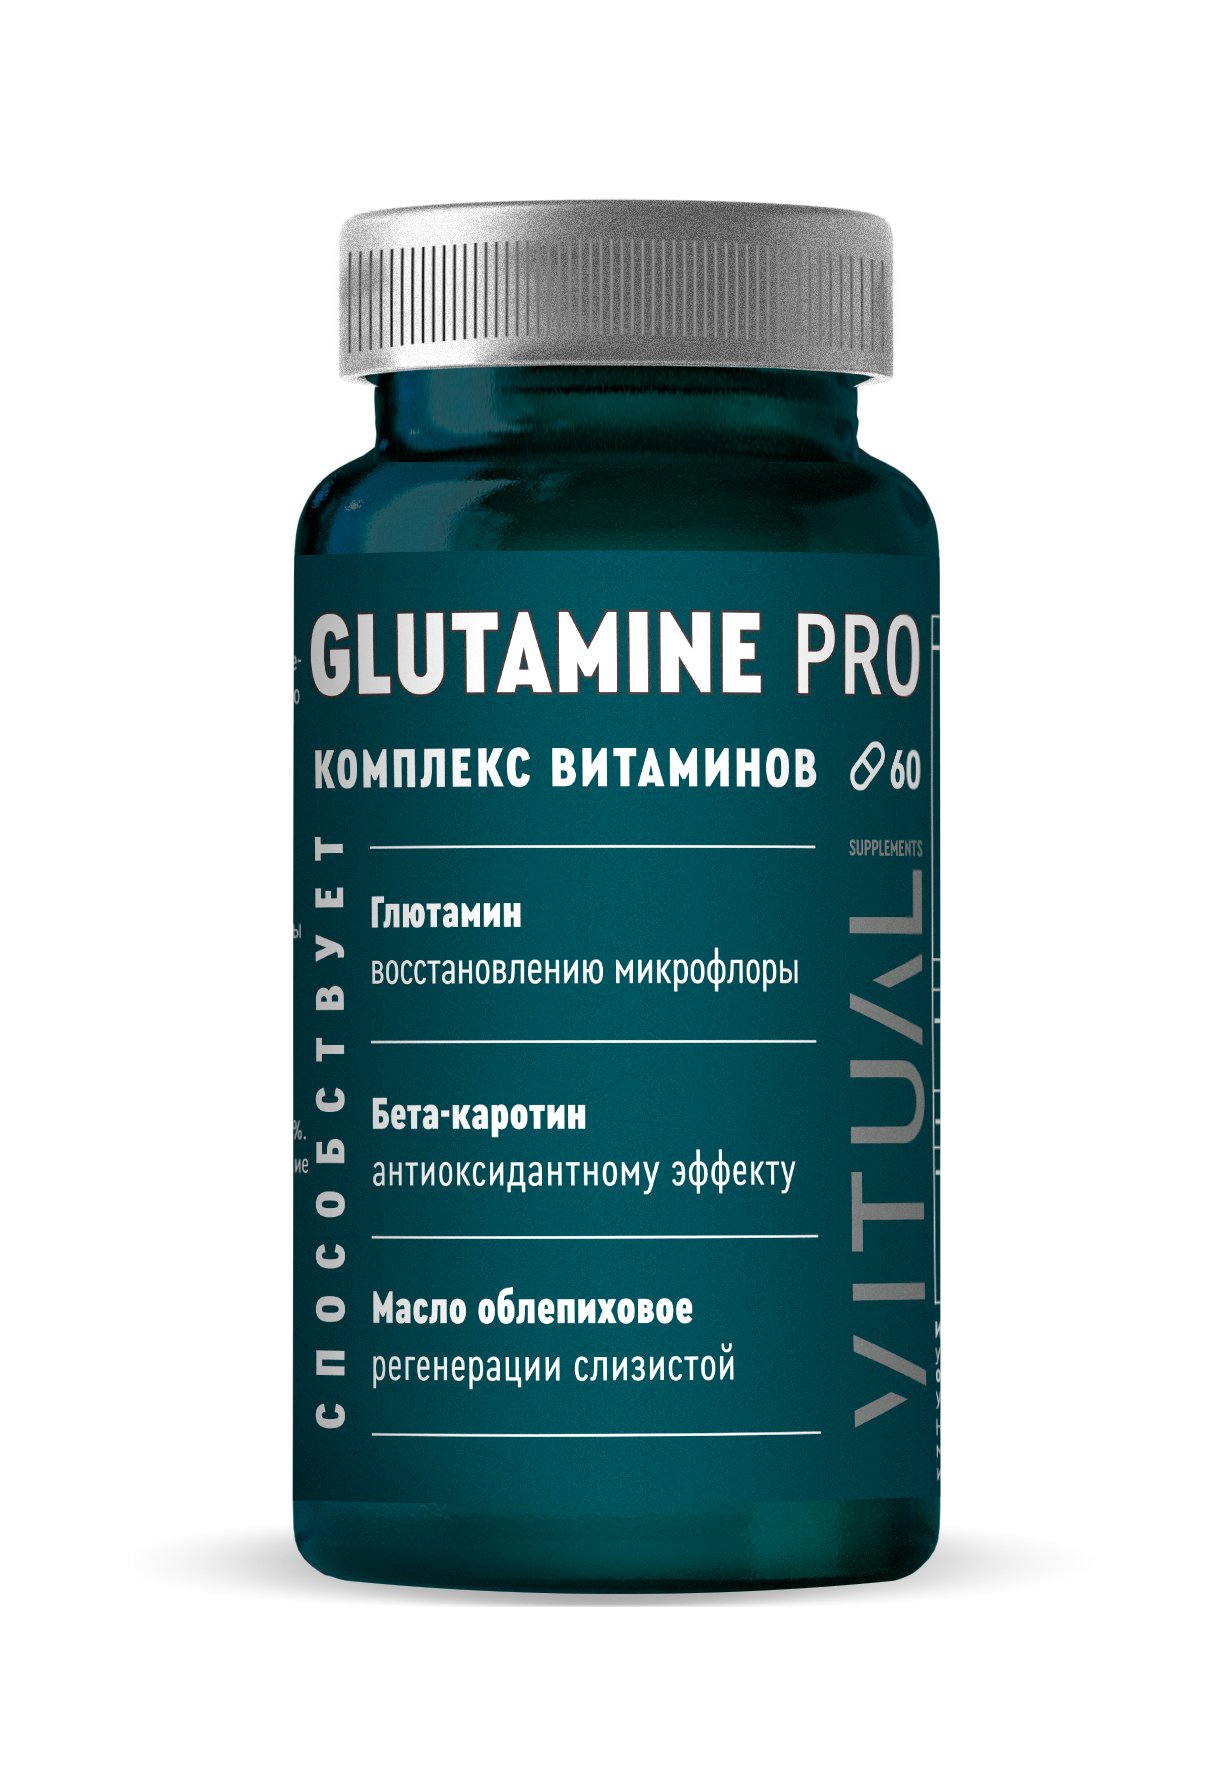 Glutamine Pro